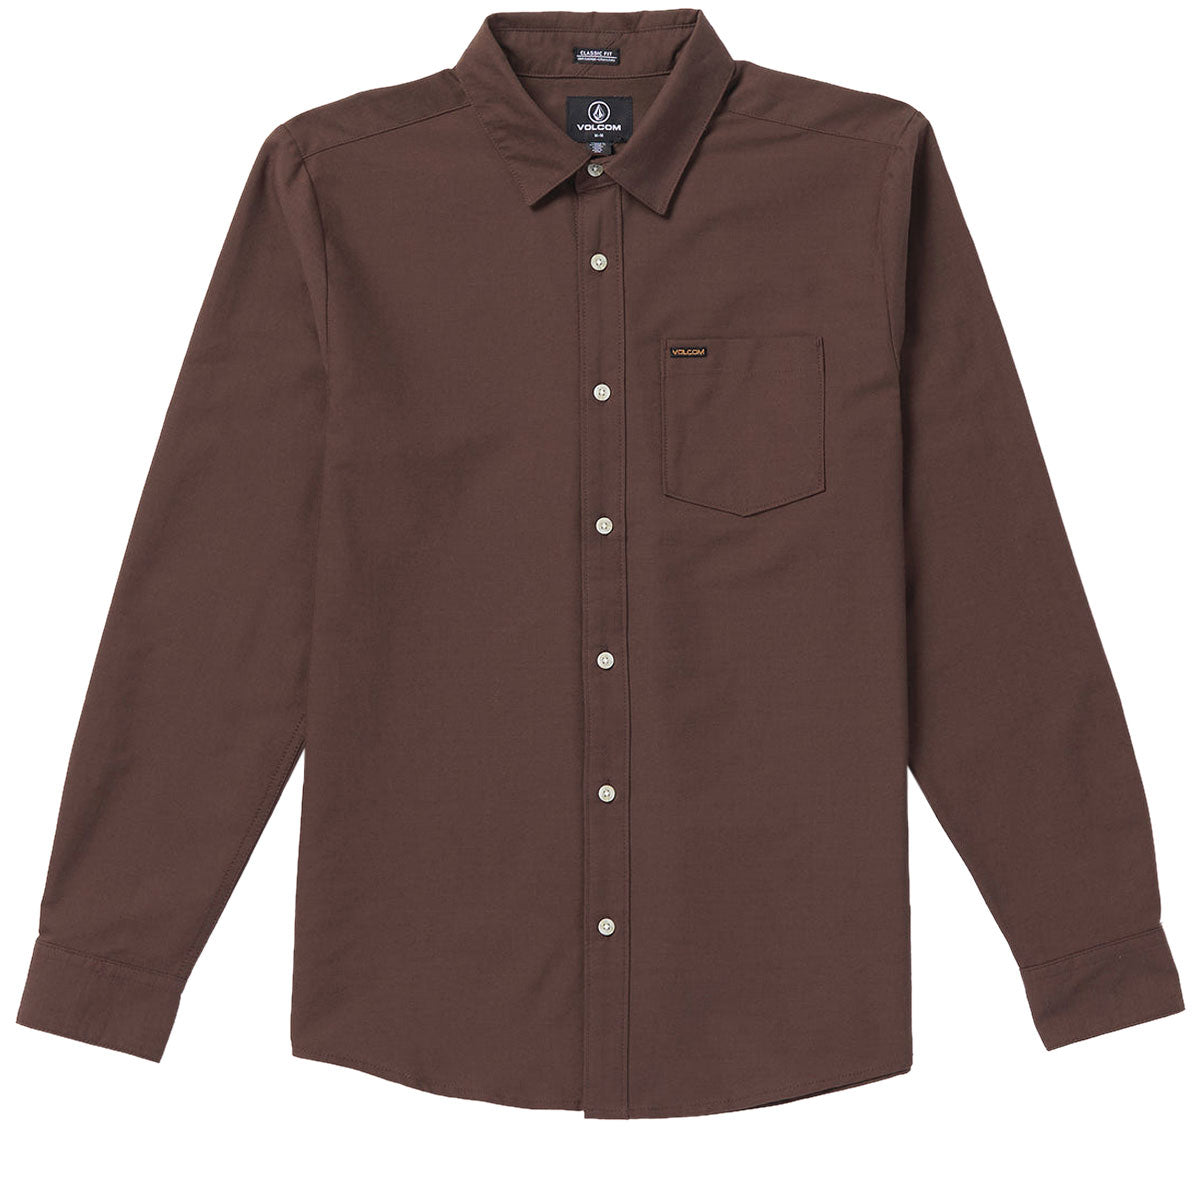 Volcom Veeco Oxford Long Sleeve Shirt - Pumice image 1